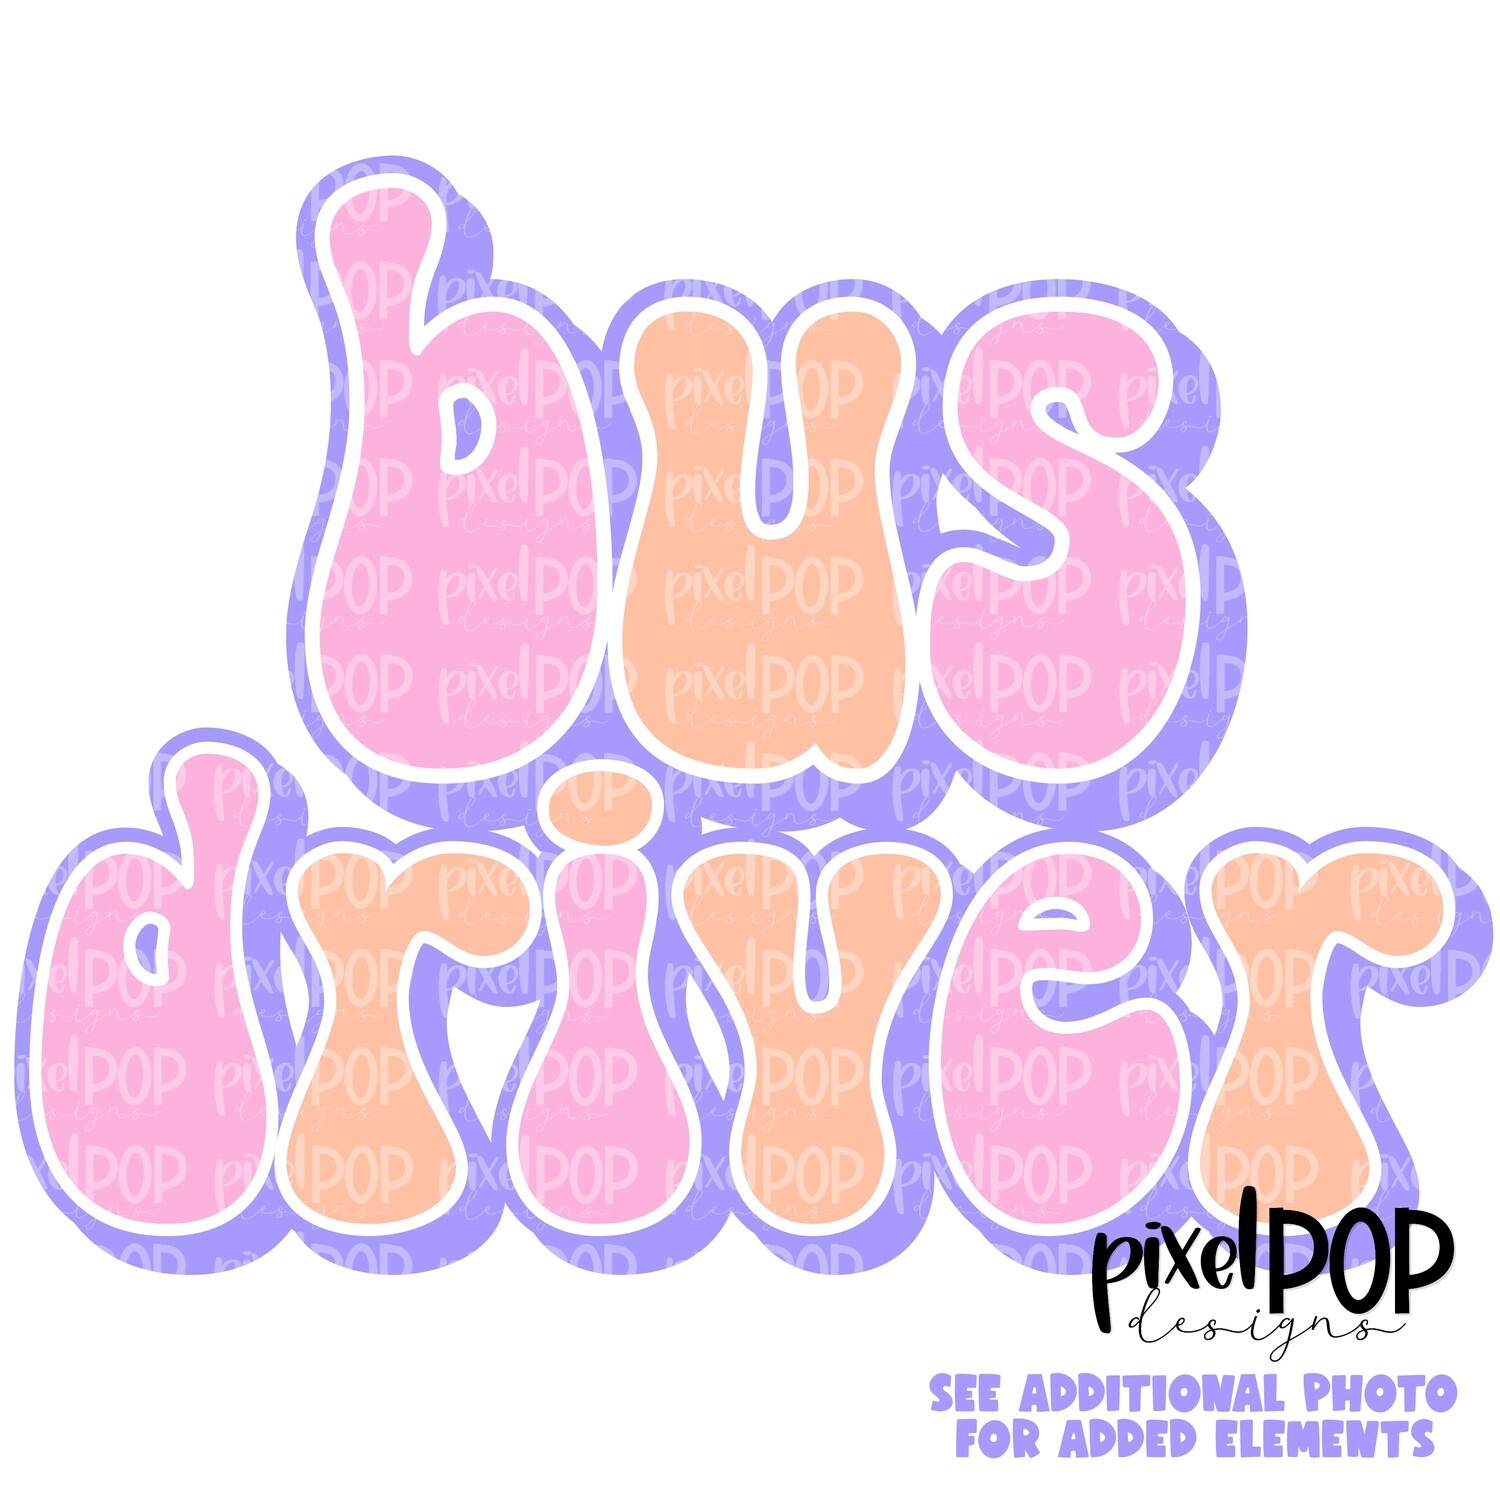 Retro Occupations Bus Driver PNG Image Sublimation Art | Hand Drawn Art | Digital Design Download | Clipart